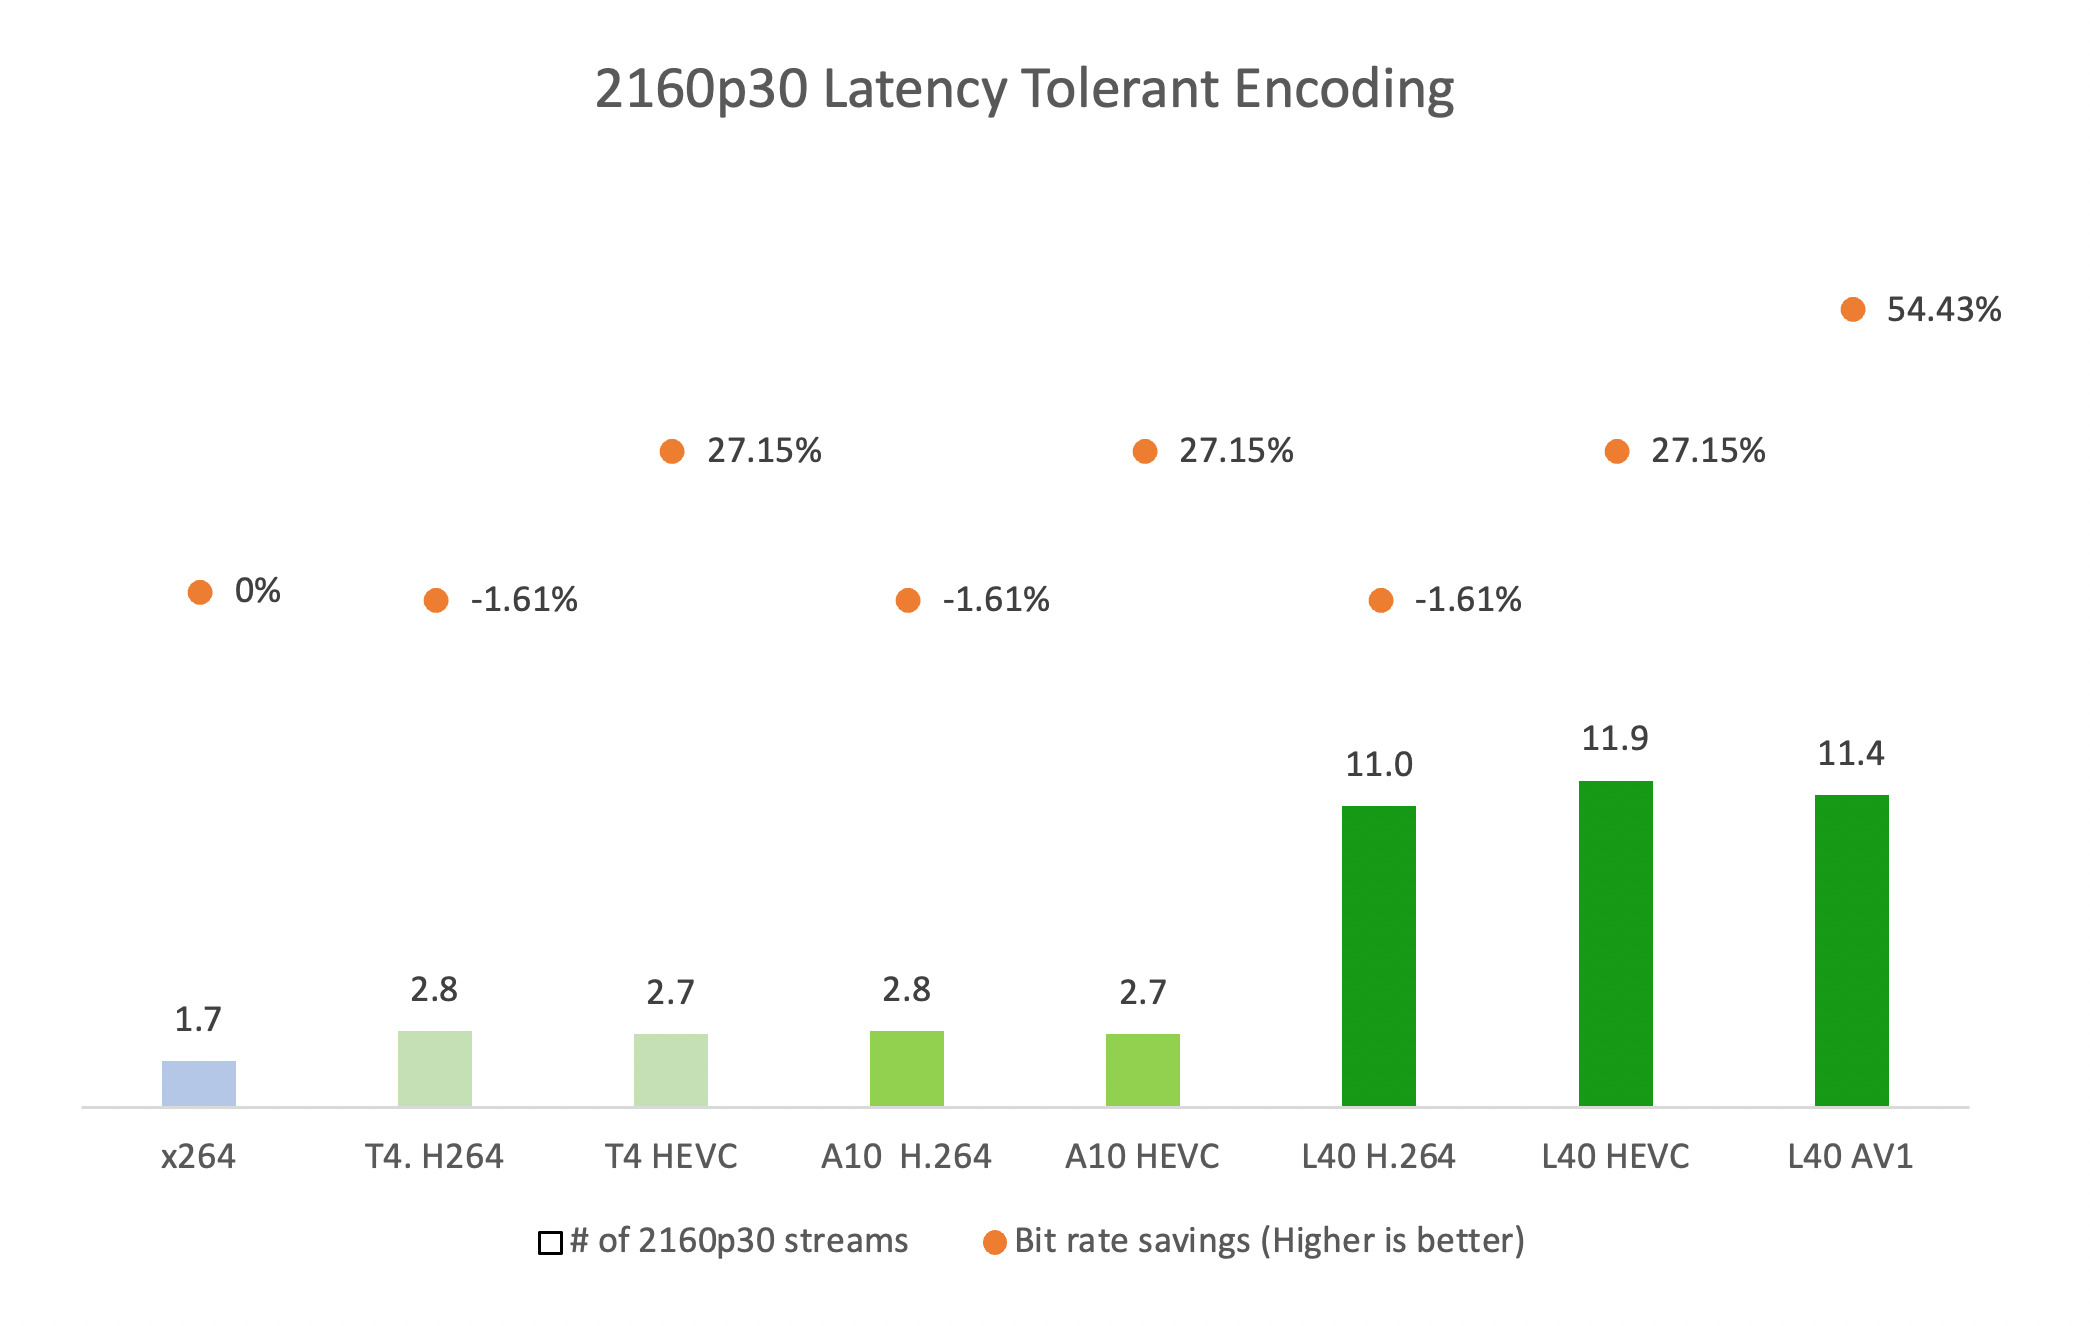 Graph showing 2160p30 latency tolerant encoding